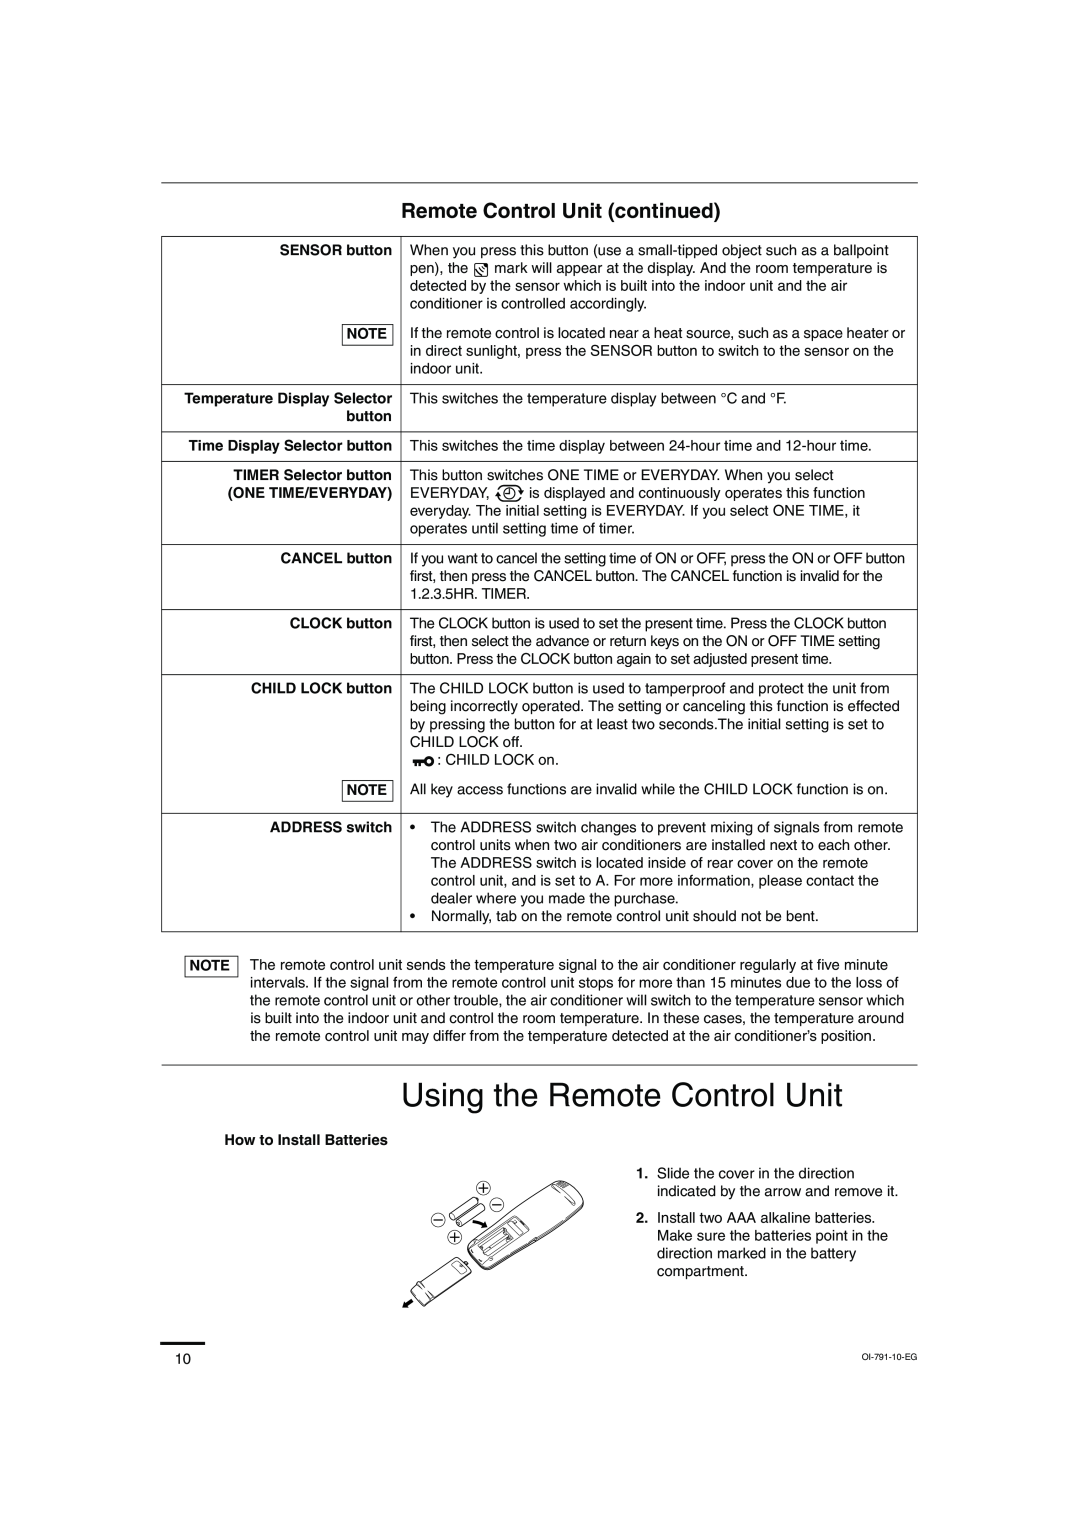 Sanyo SAP-KRV94EHDX service manual Using the Remote Control Unit, Remote Control Unit continued 